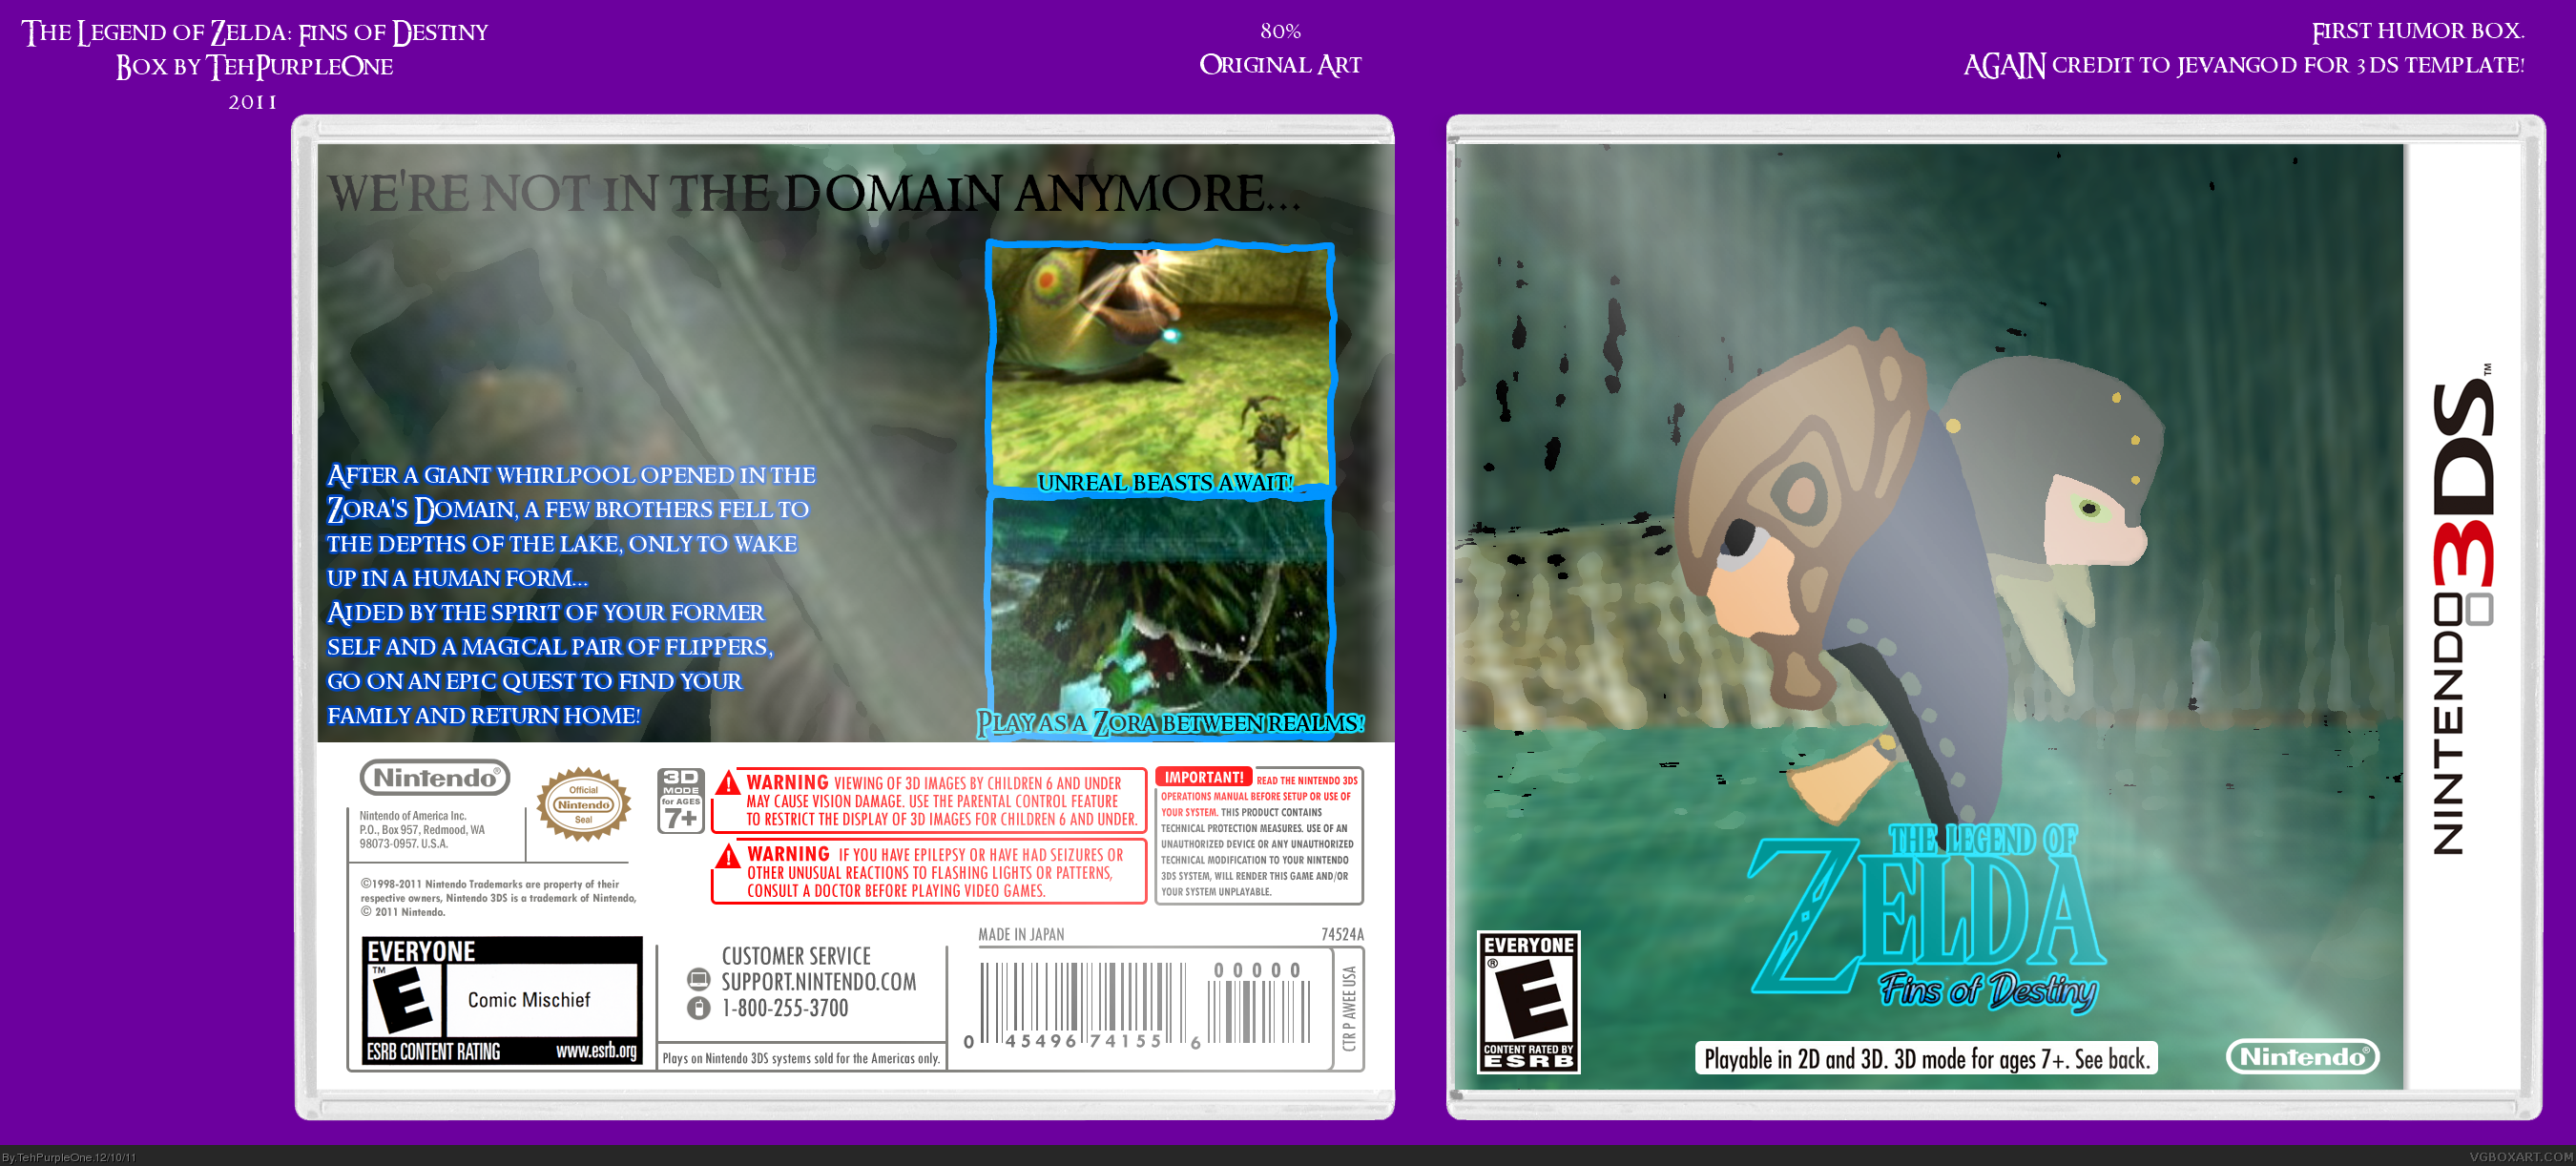 The Legend of Zelda: Fins of Destiny box cover